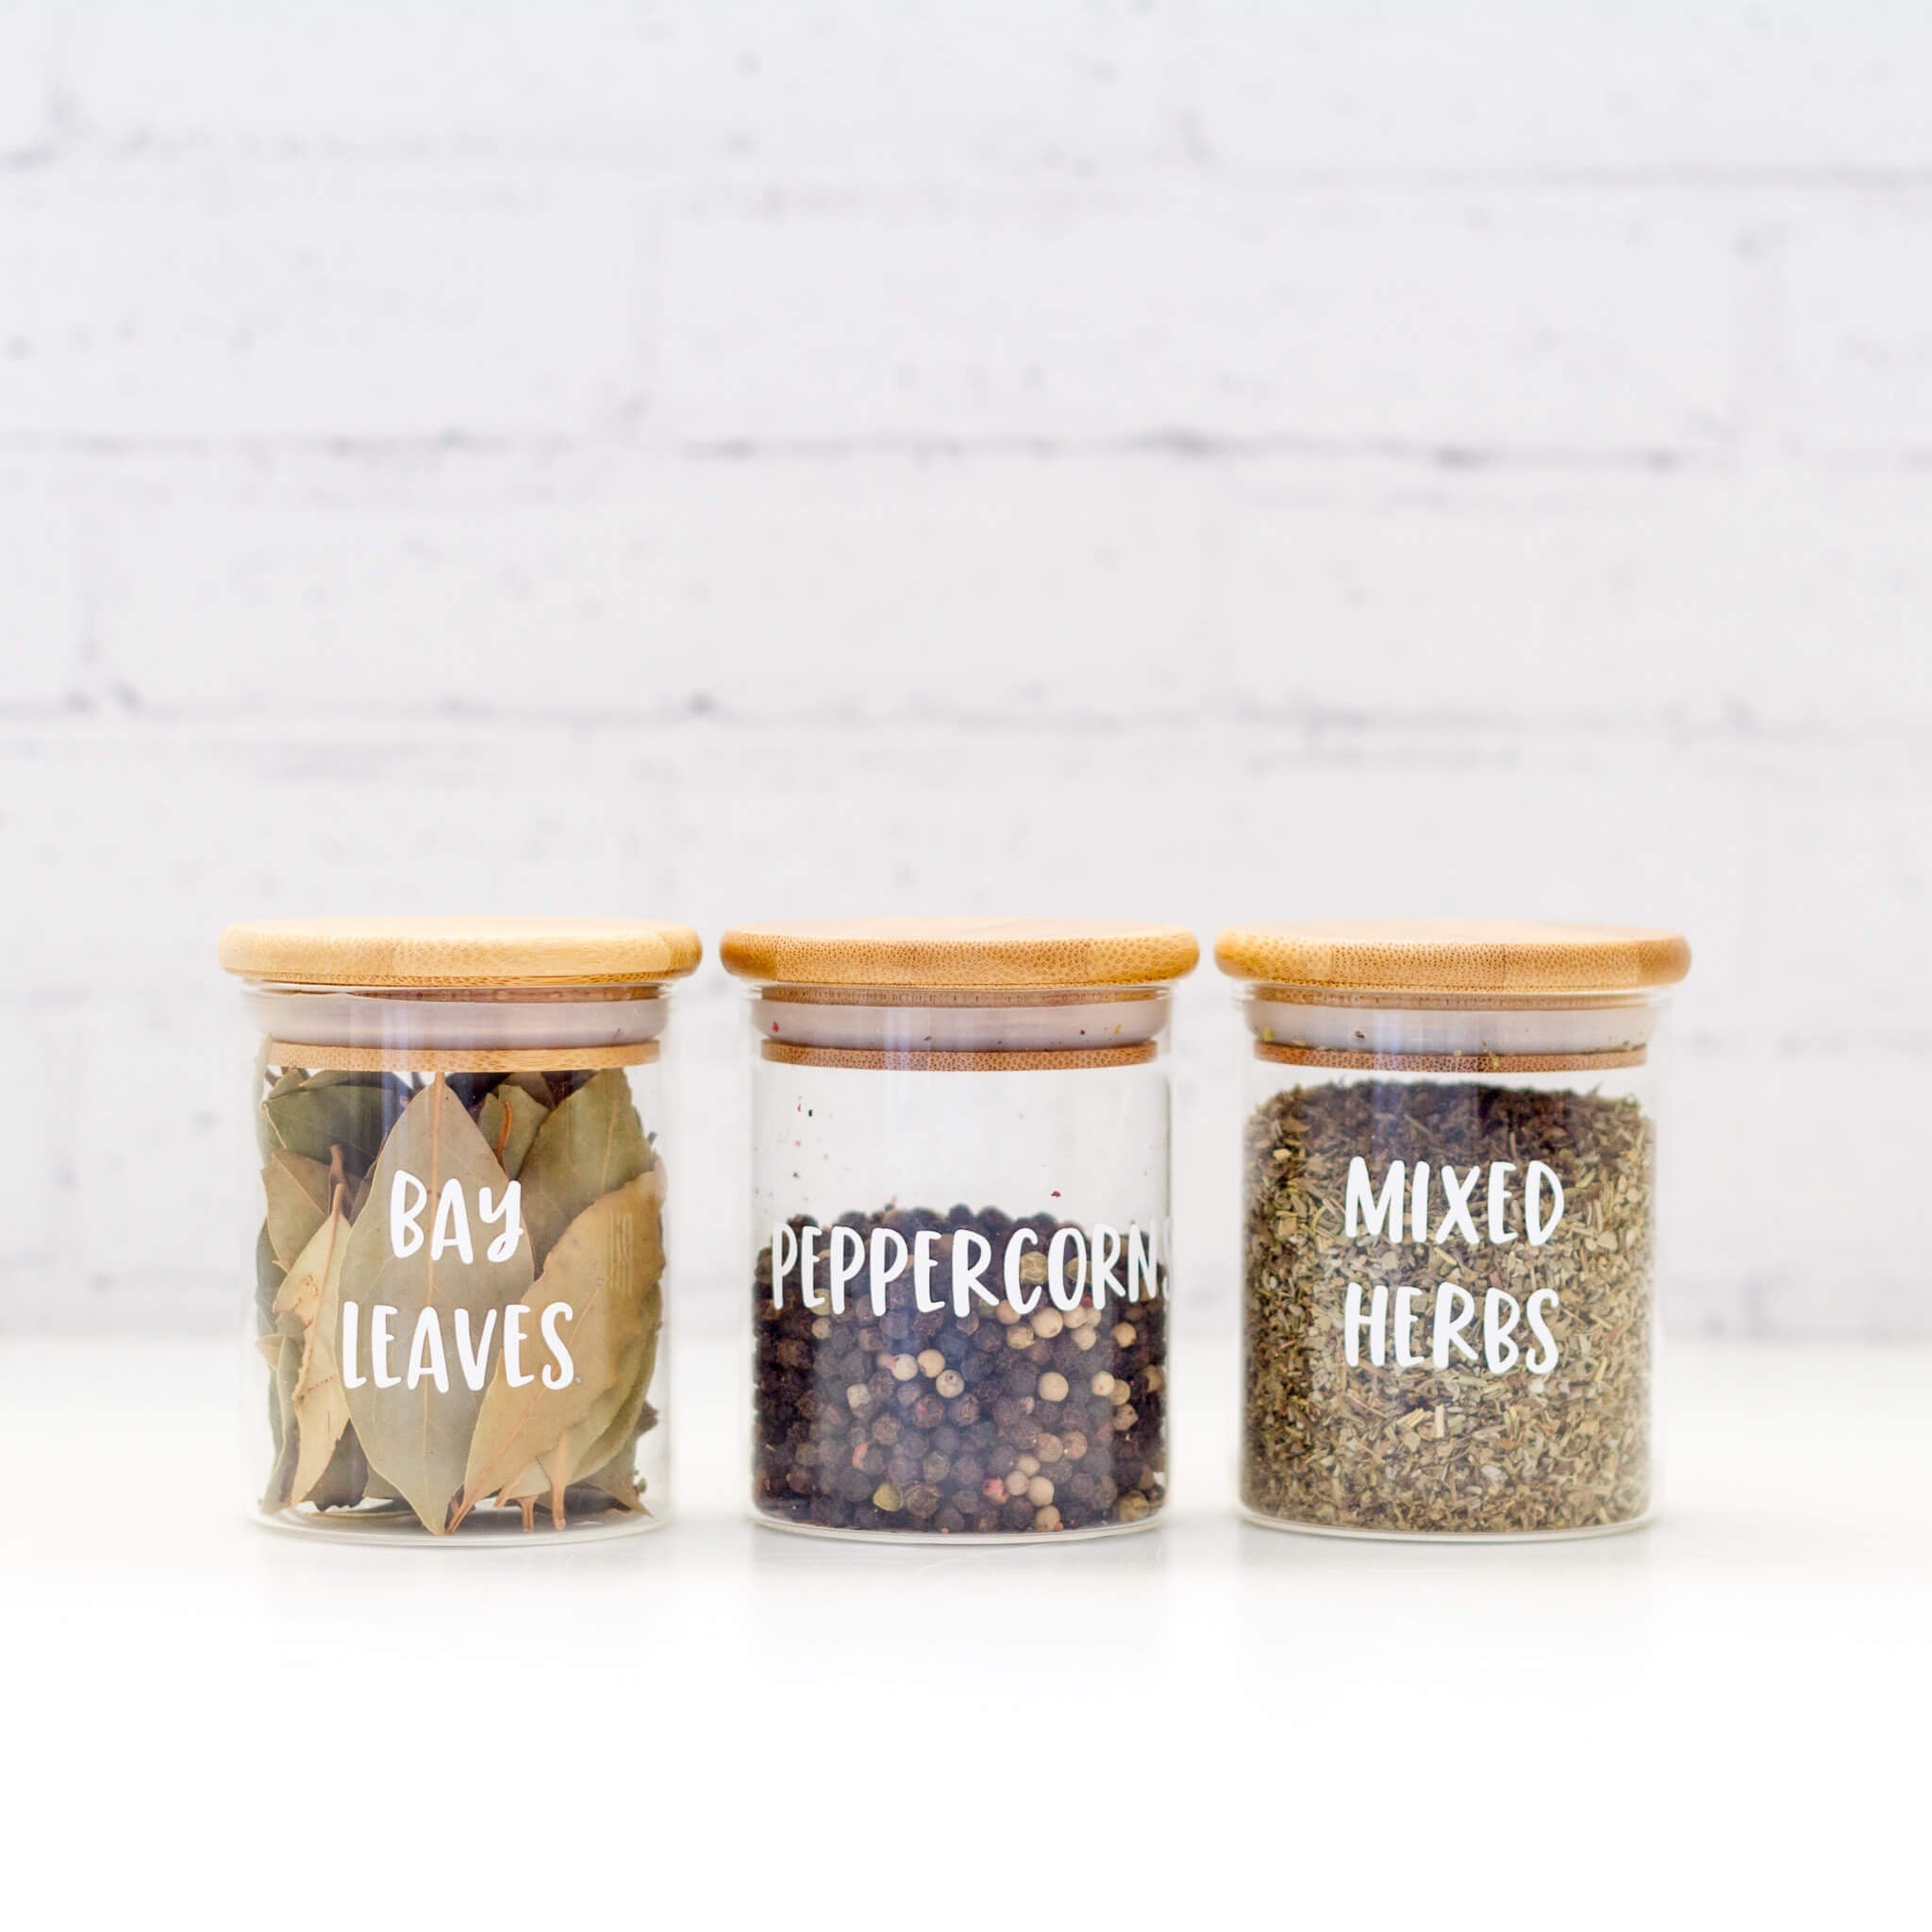 Large Spice jars + Labels